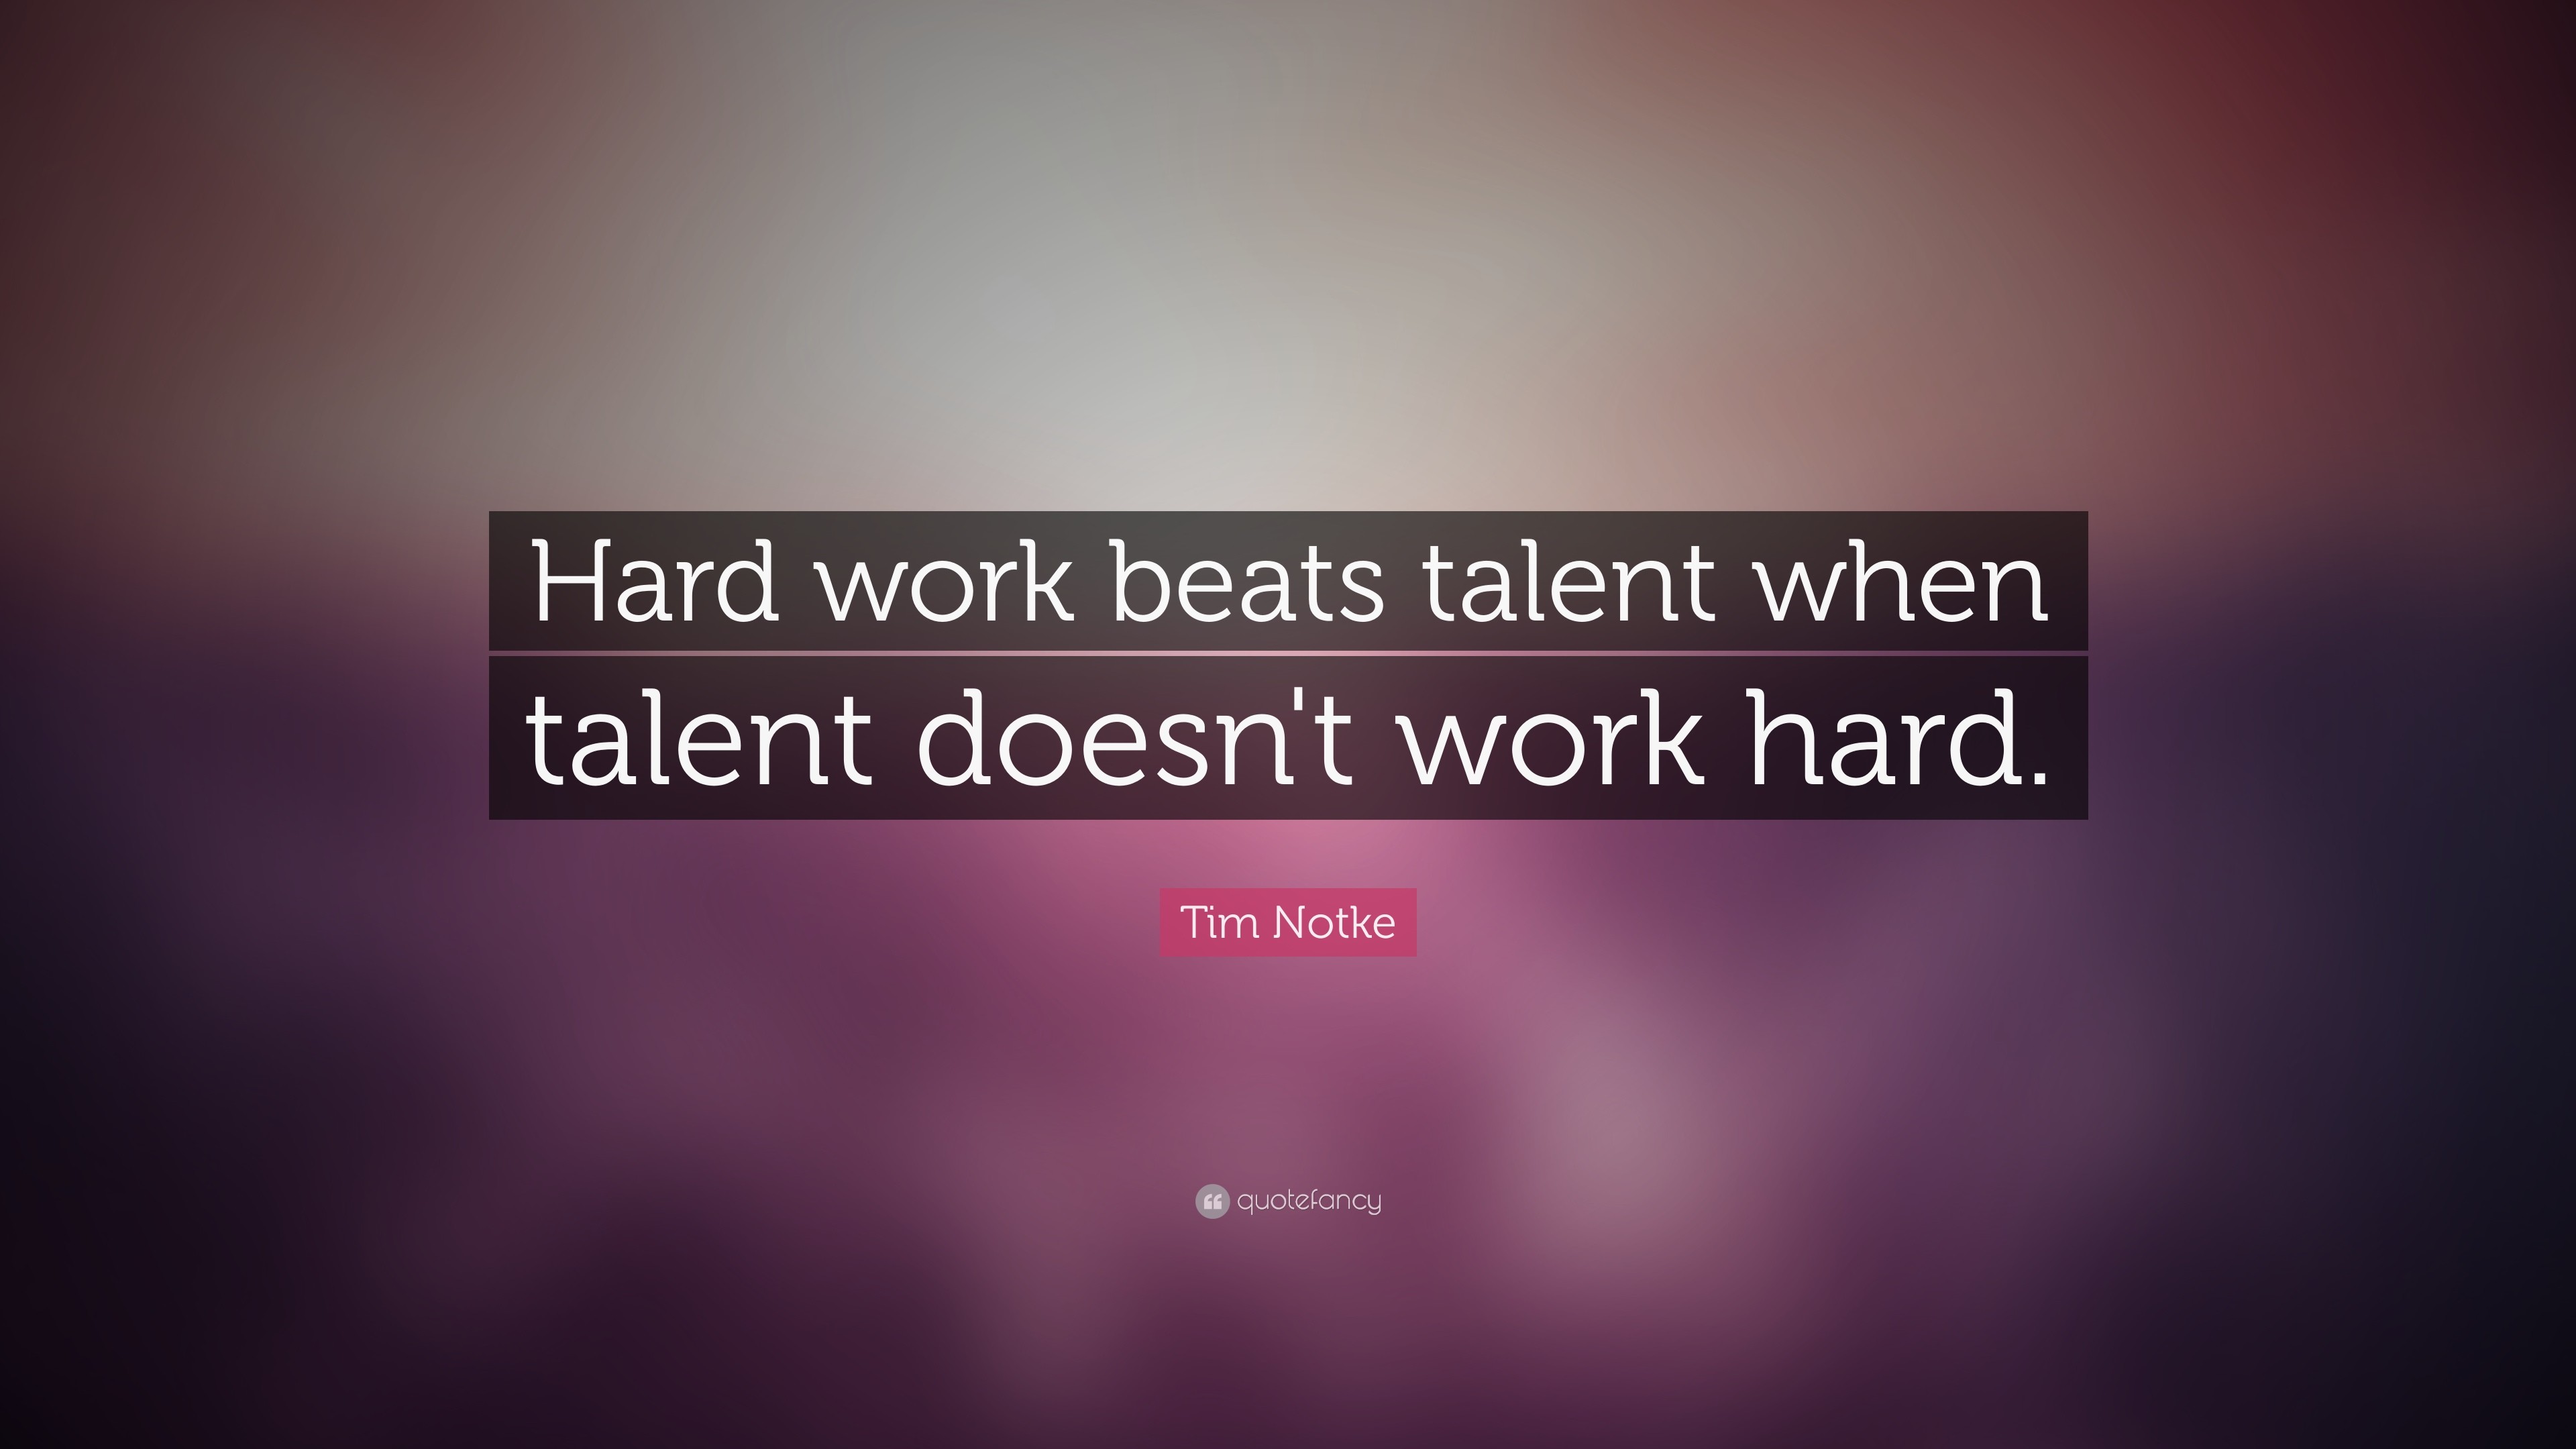 3840x2160 Tim Notke Quote: “Hard work beats talent when talent doesn't work hard